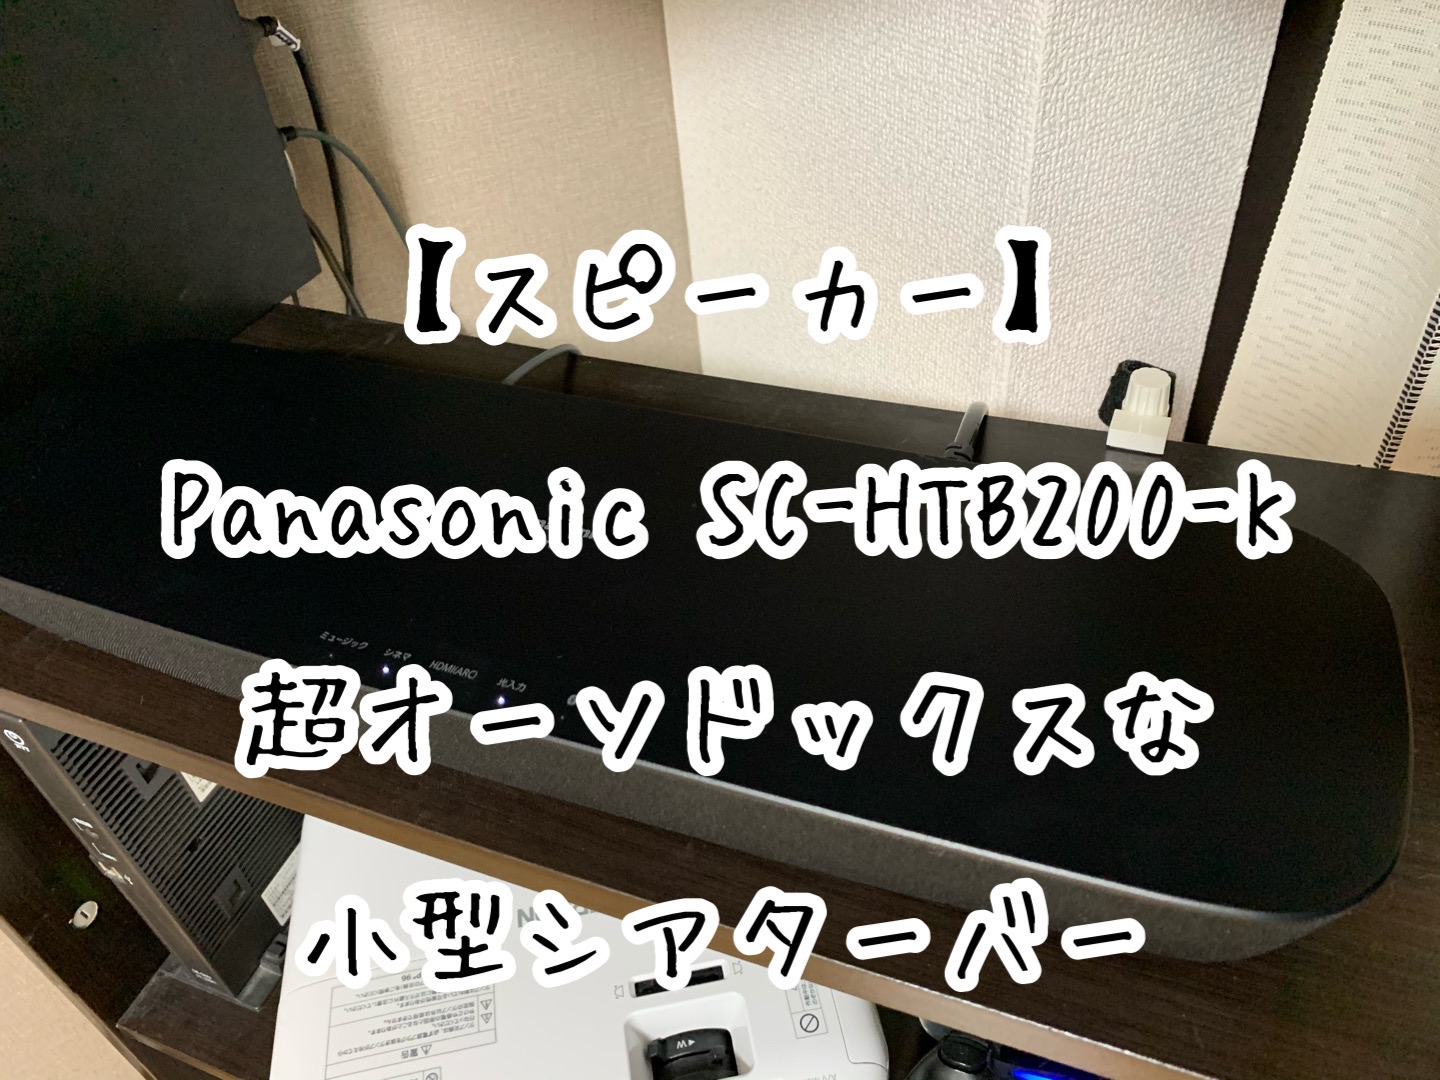 Panasonic シアターバー SC-HTB200-K